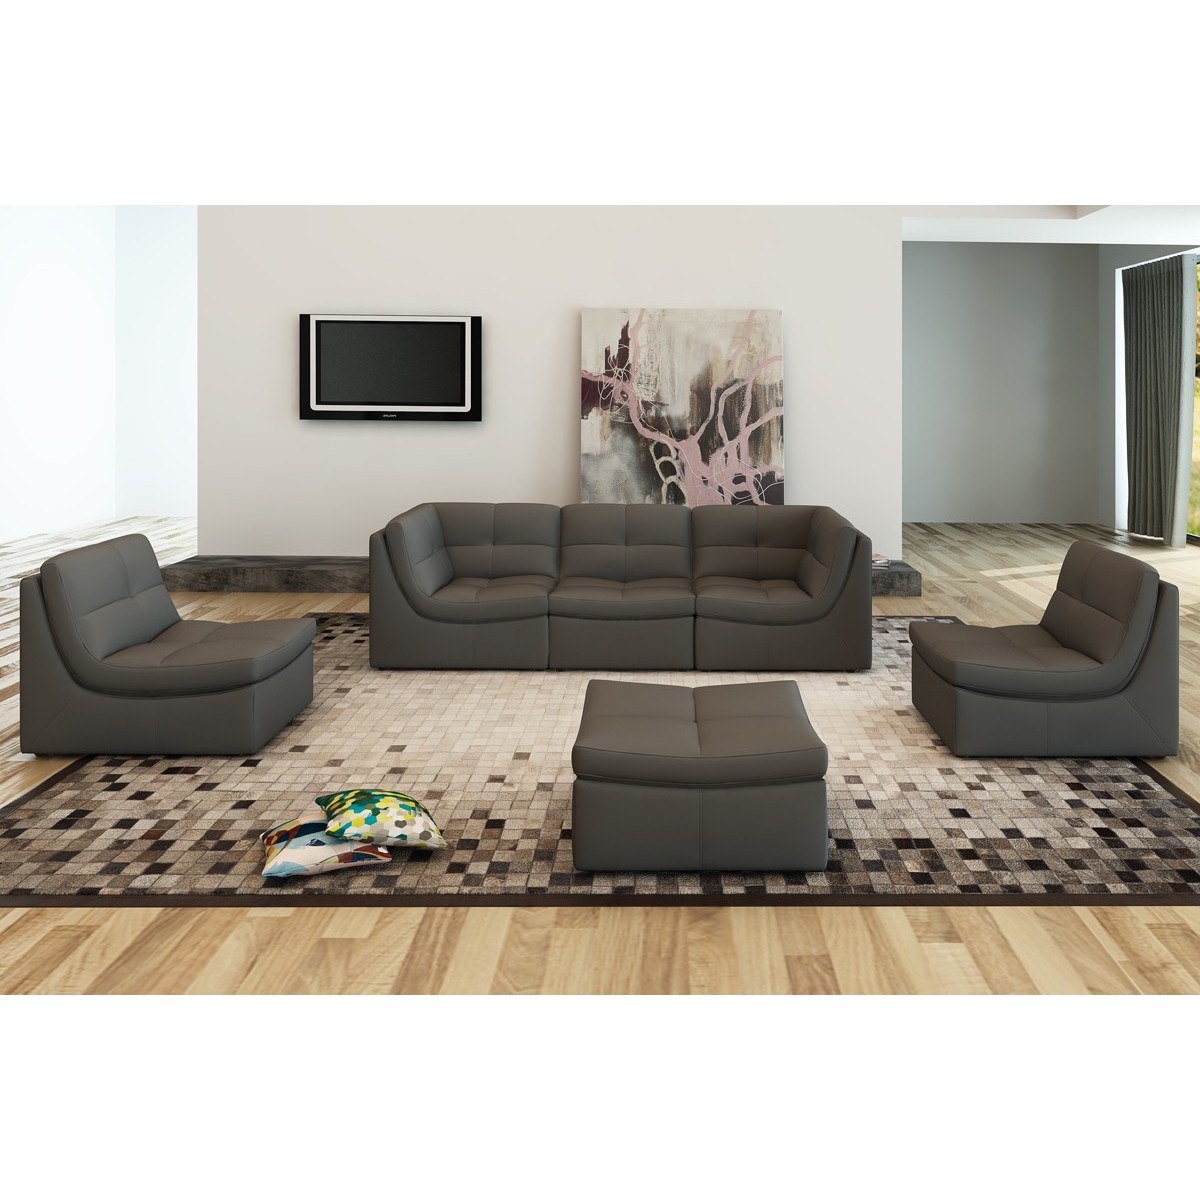 Bedroom La Furniture, Cloud Leather Sectional